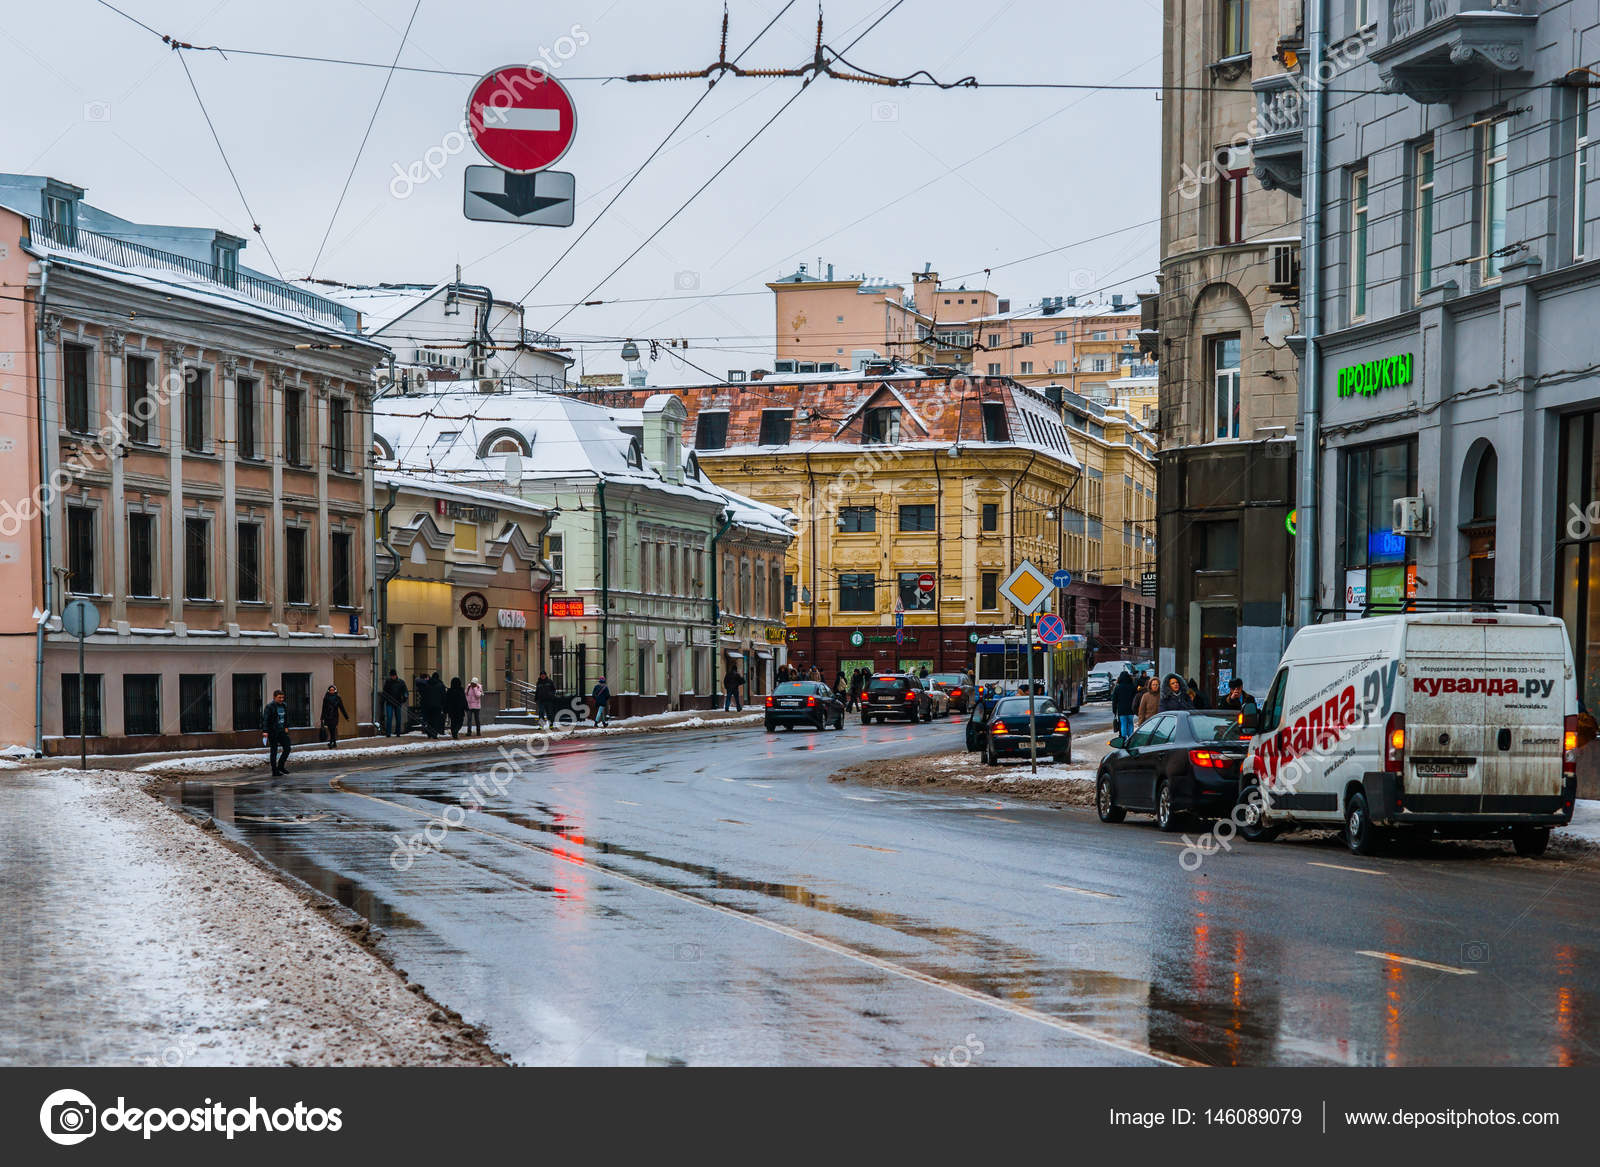 depositphotos 146089079-stock-photo-moscow-solyanka-street-in-winter